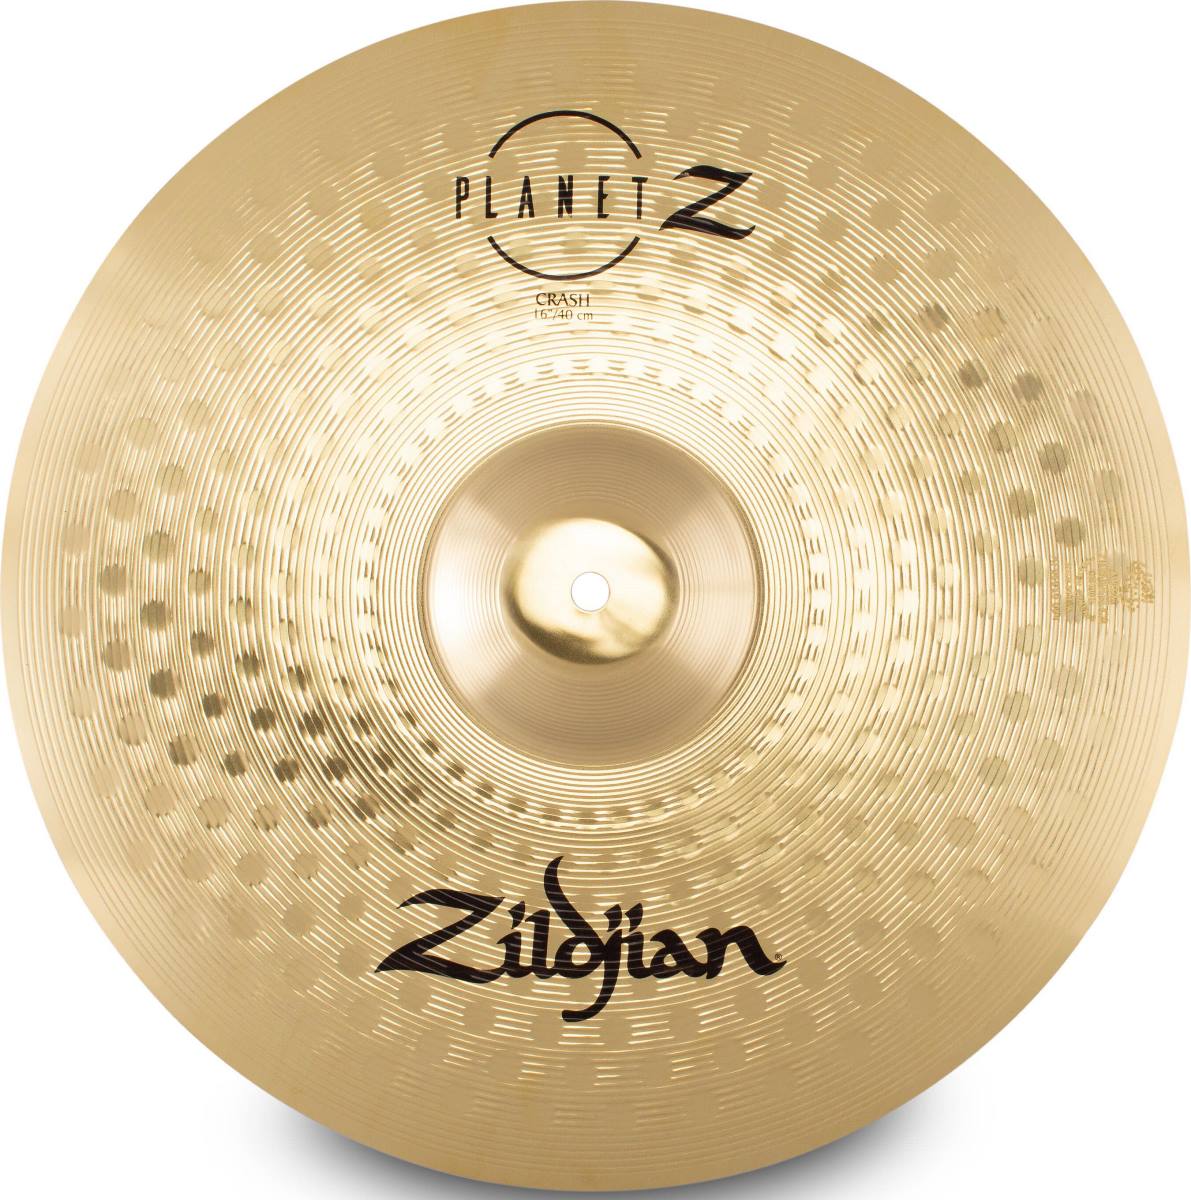 Тарелки, барабаны для ударных установок Zildjian ZP16C 16' PLANET Z CRASH тарелки барабаны для ударных установок zildjian sd4680 s dark cymbal pack 14h 16c 18c 20r